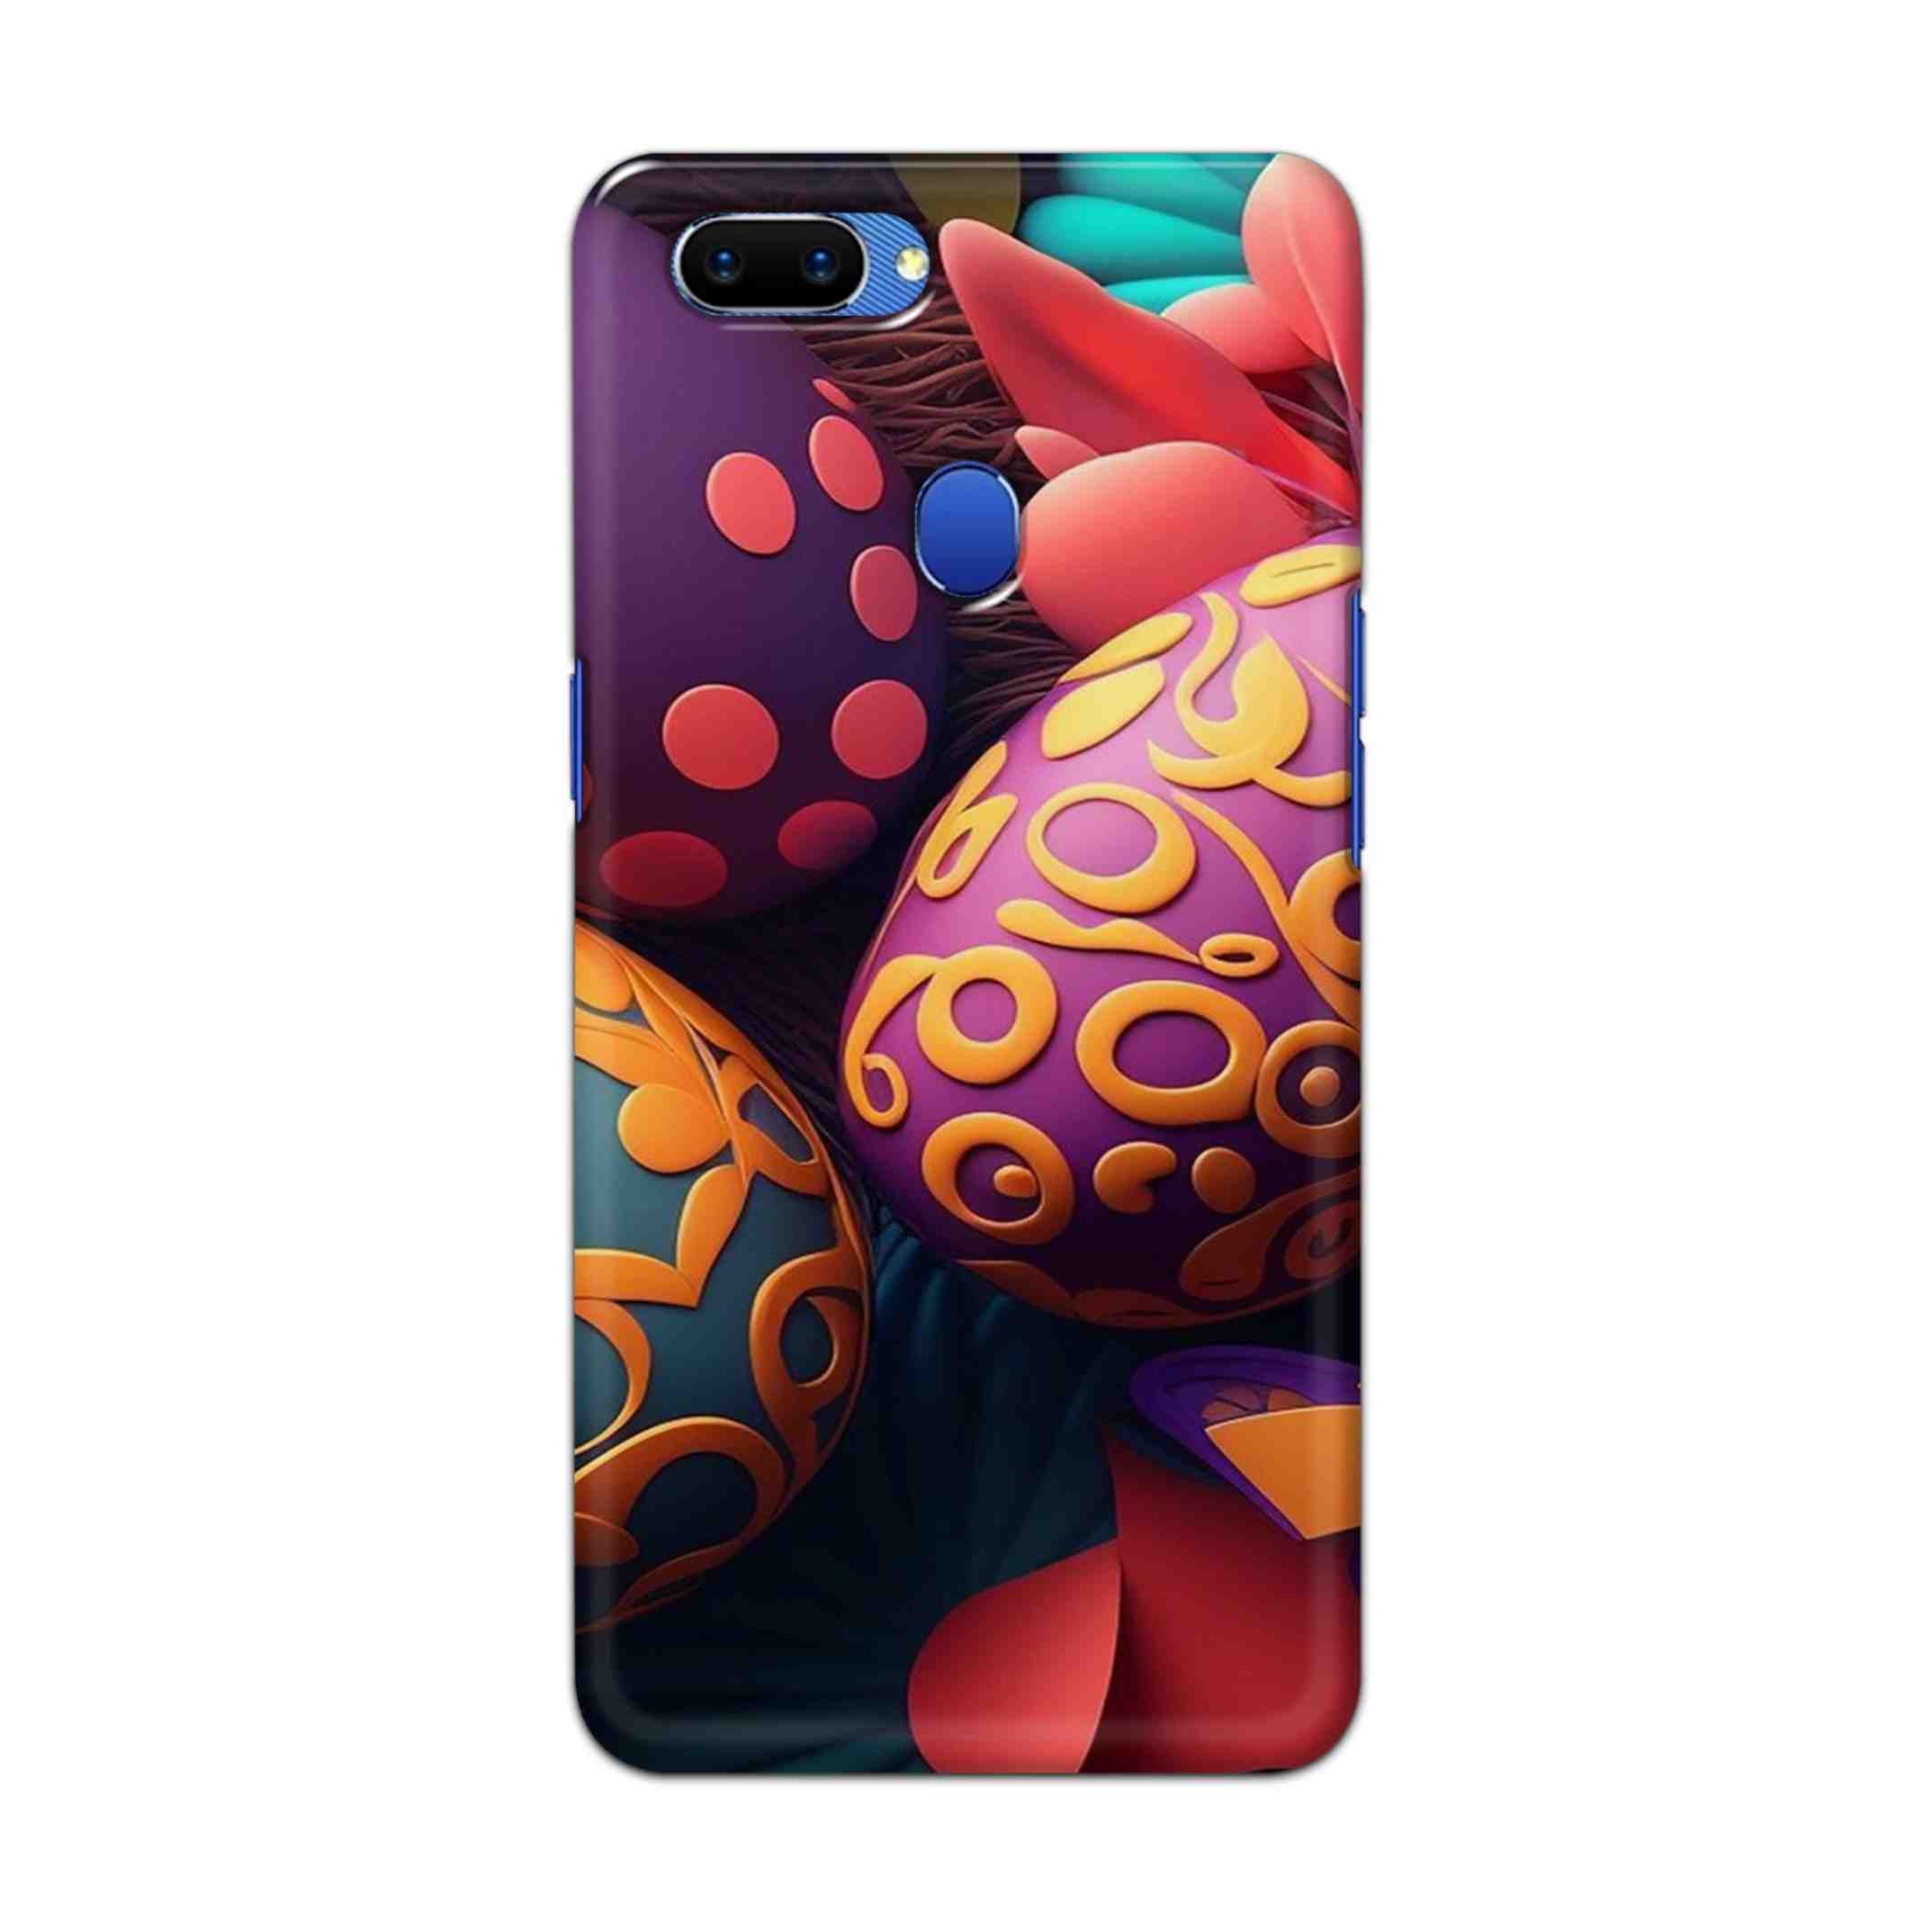 Buy Easter Egg Hard Back Mobile Phone Case Cover For Oppo A5 Online